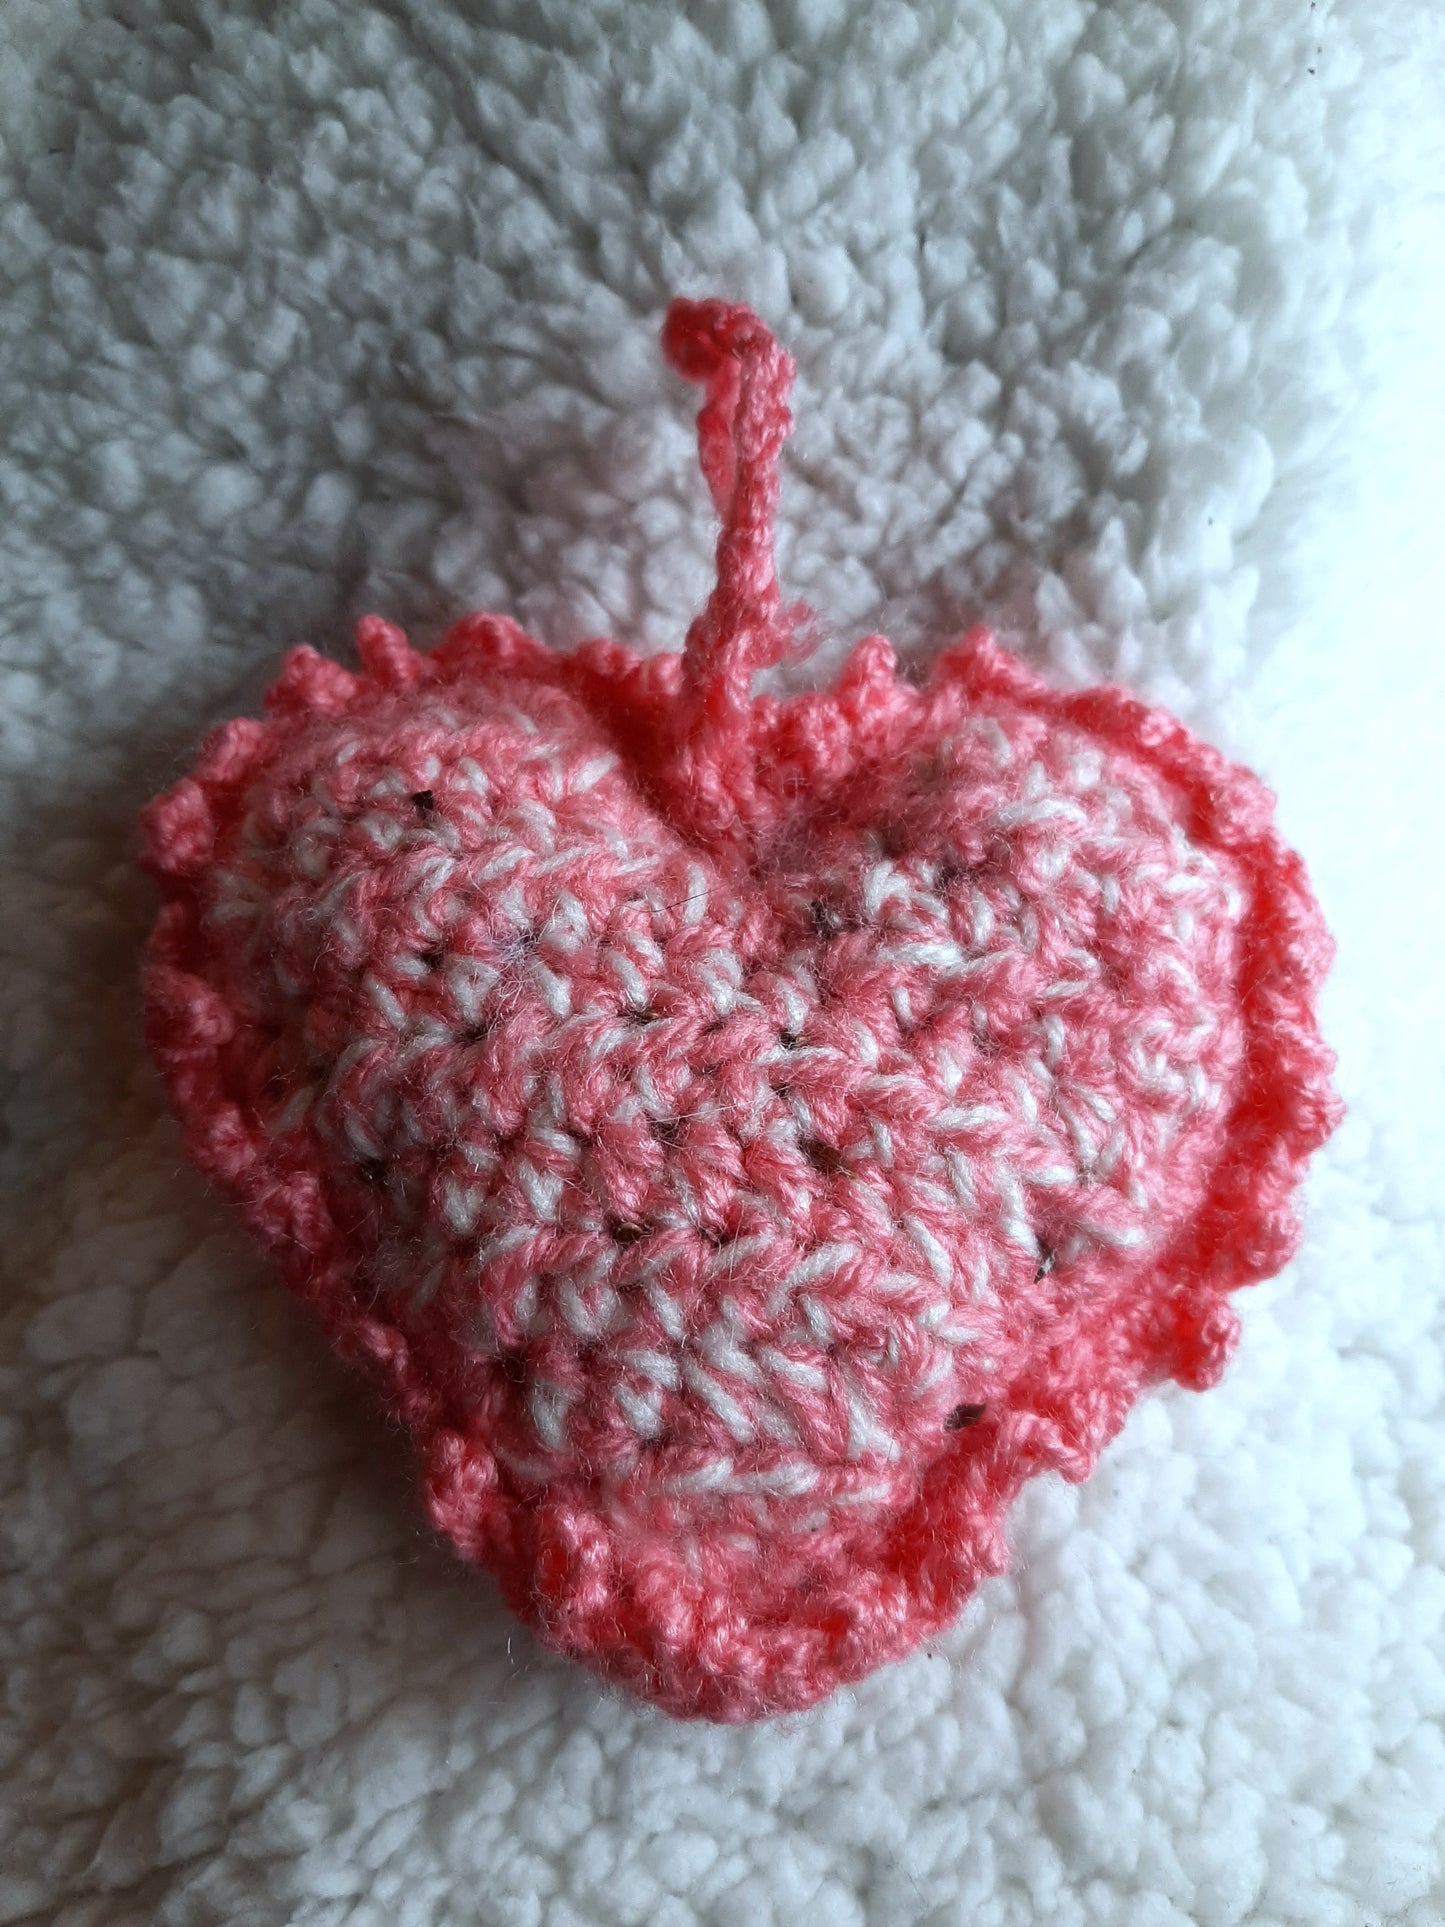 Heart-shaped sachet